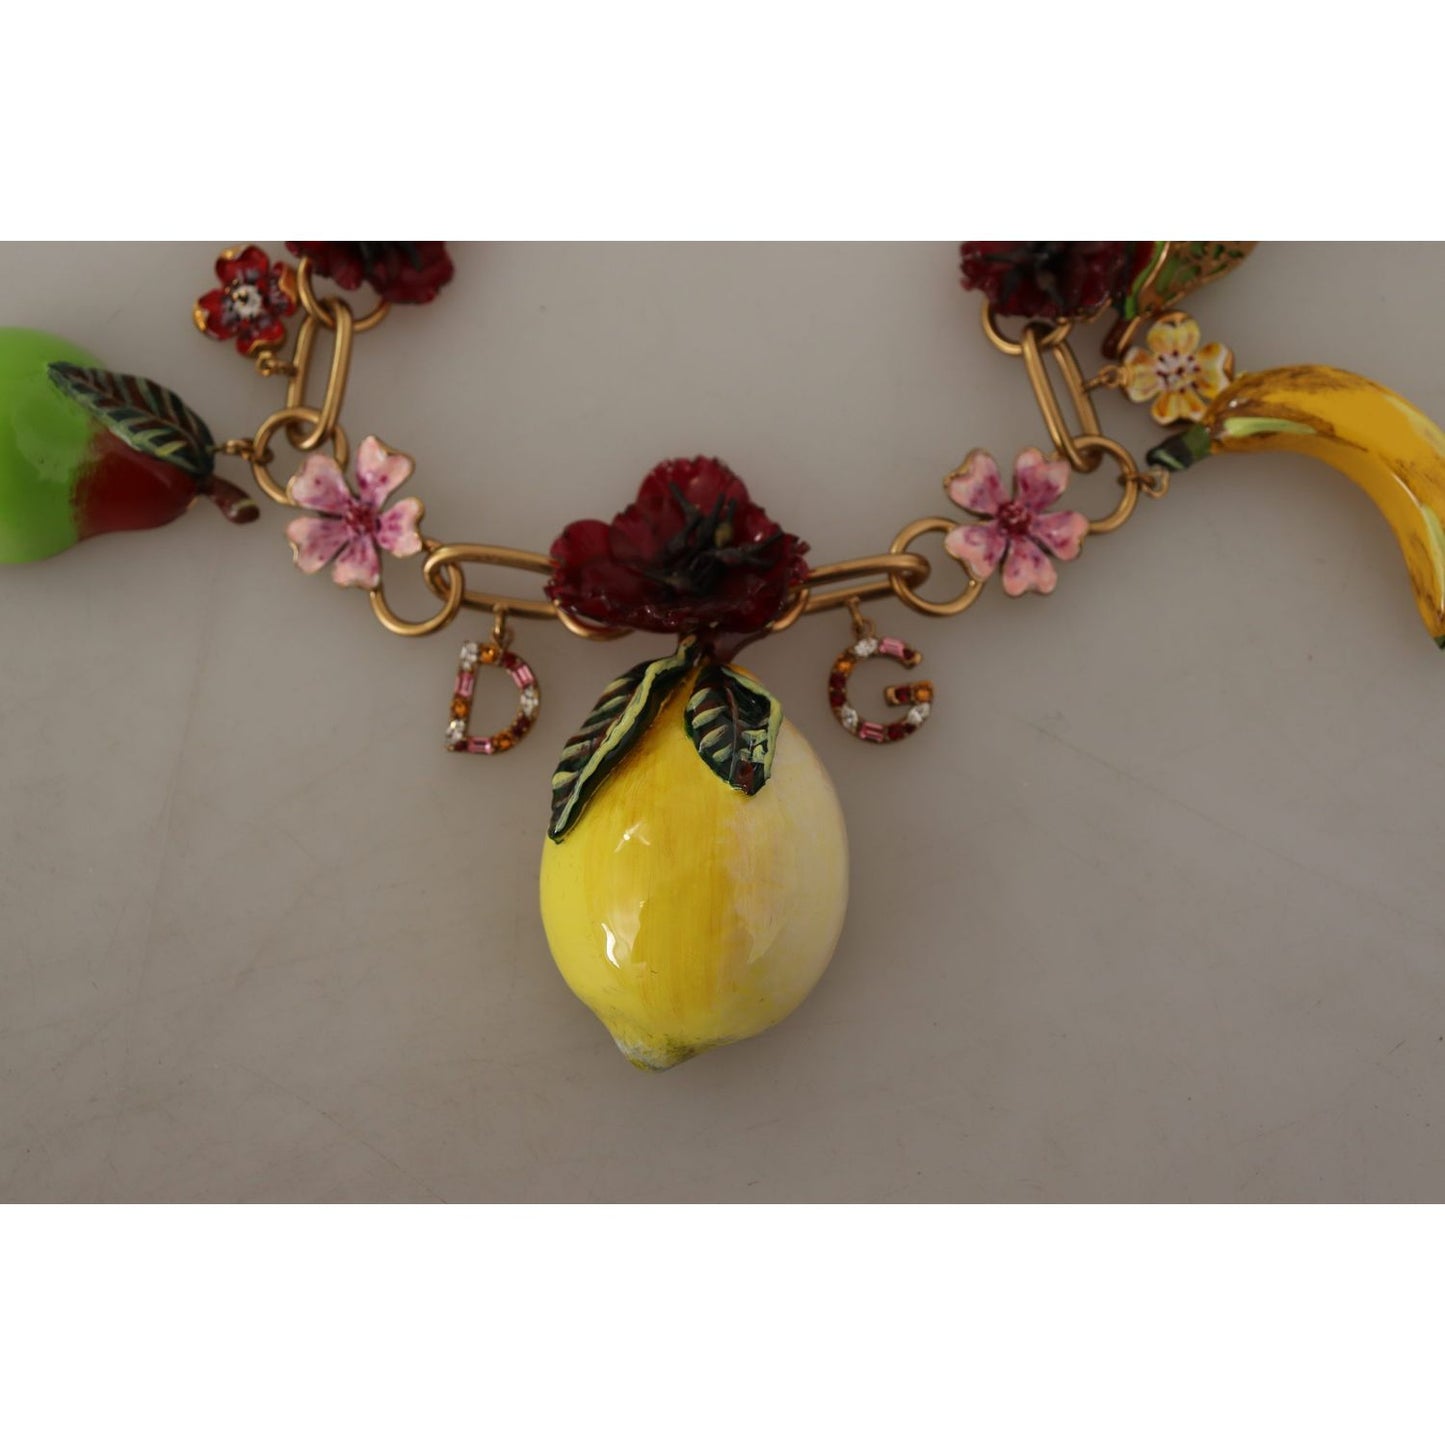 Dolce & Gabbana Chic Gold Statement Sicily Fruit Necklace gold-brass-sicily-fruits-roses-statement-necklace WOMAN NECKLACE IMG_1915-scaled-b52c866b-da8.jpg